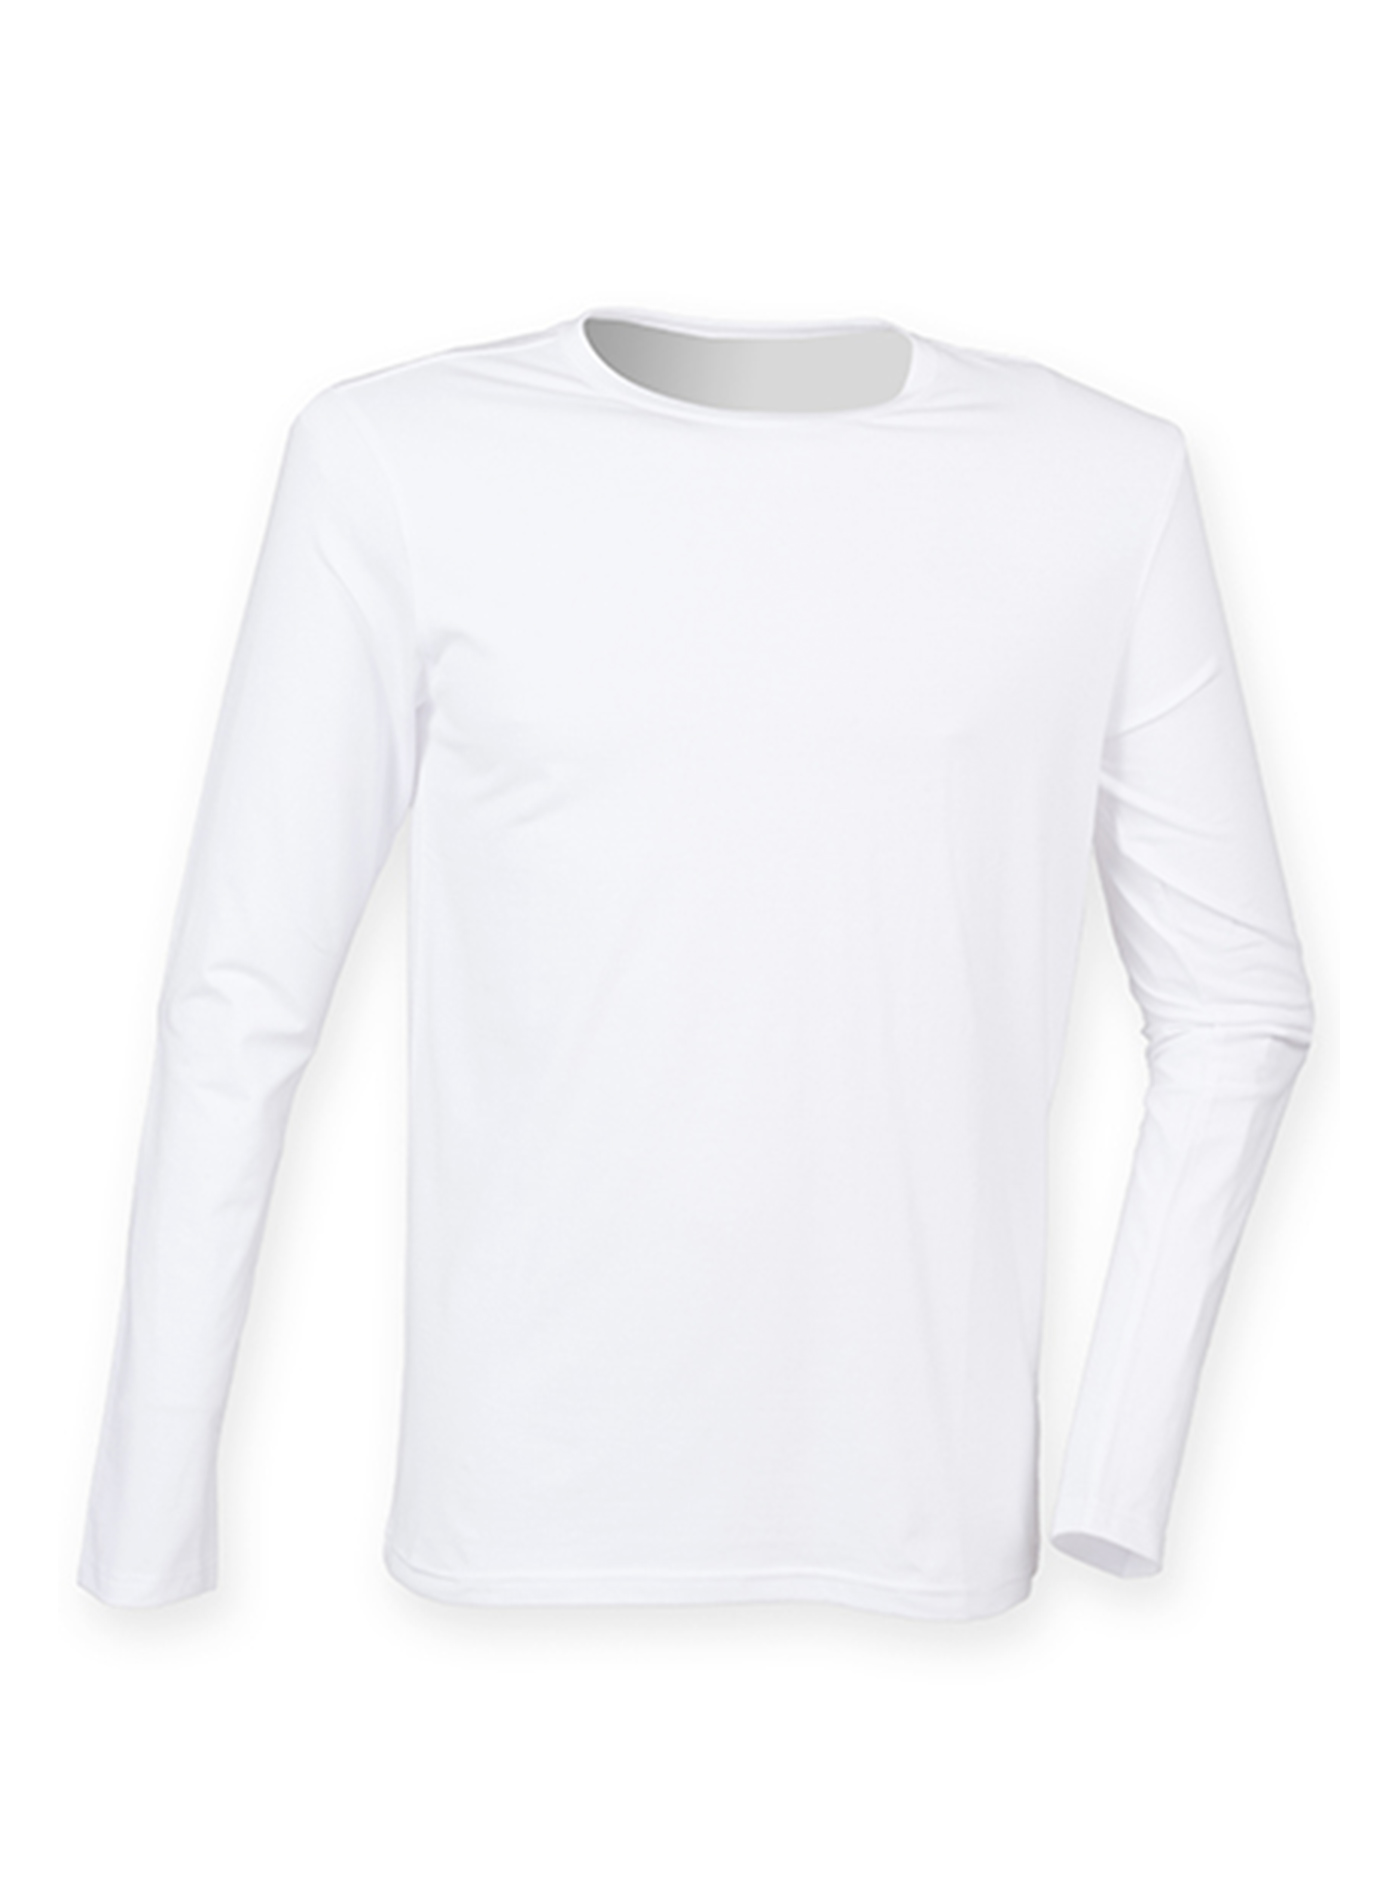 Pánské tričko s dlouhým rukávem Skinnifit Feels Good - Bílá L